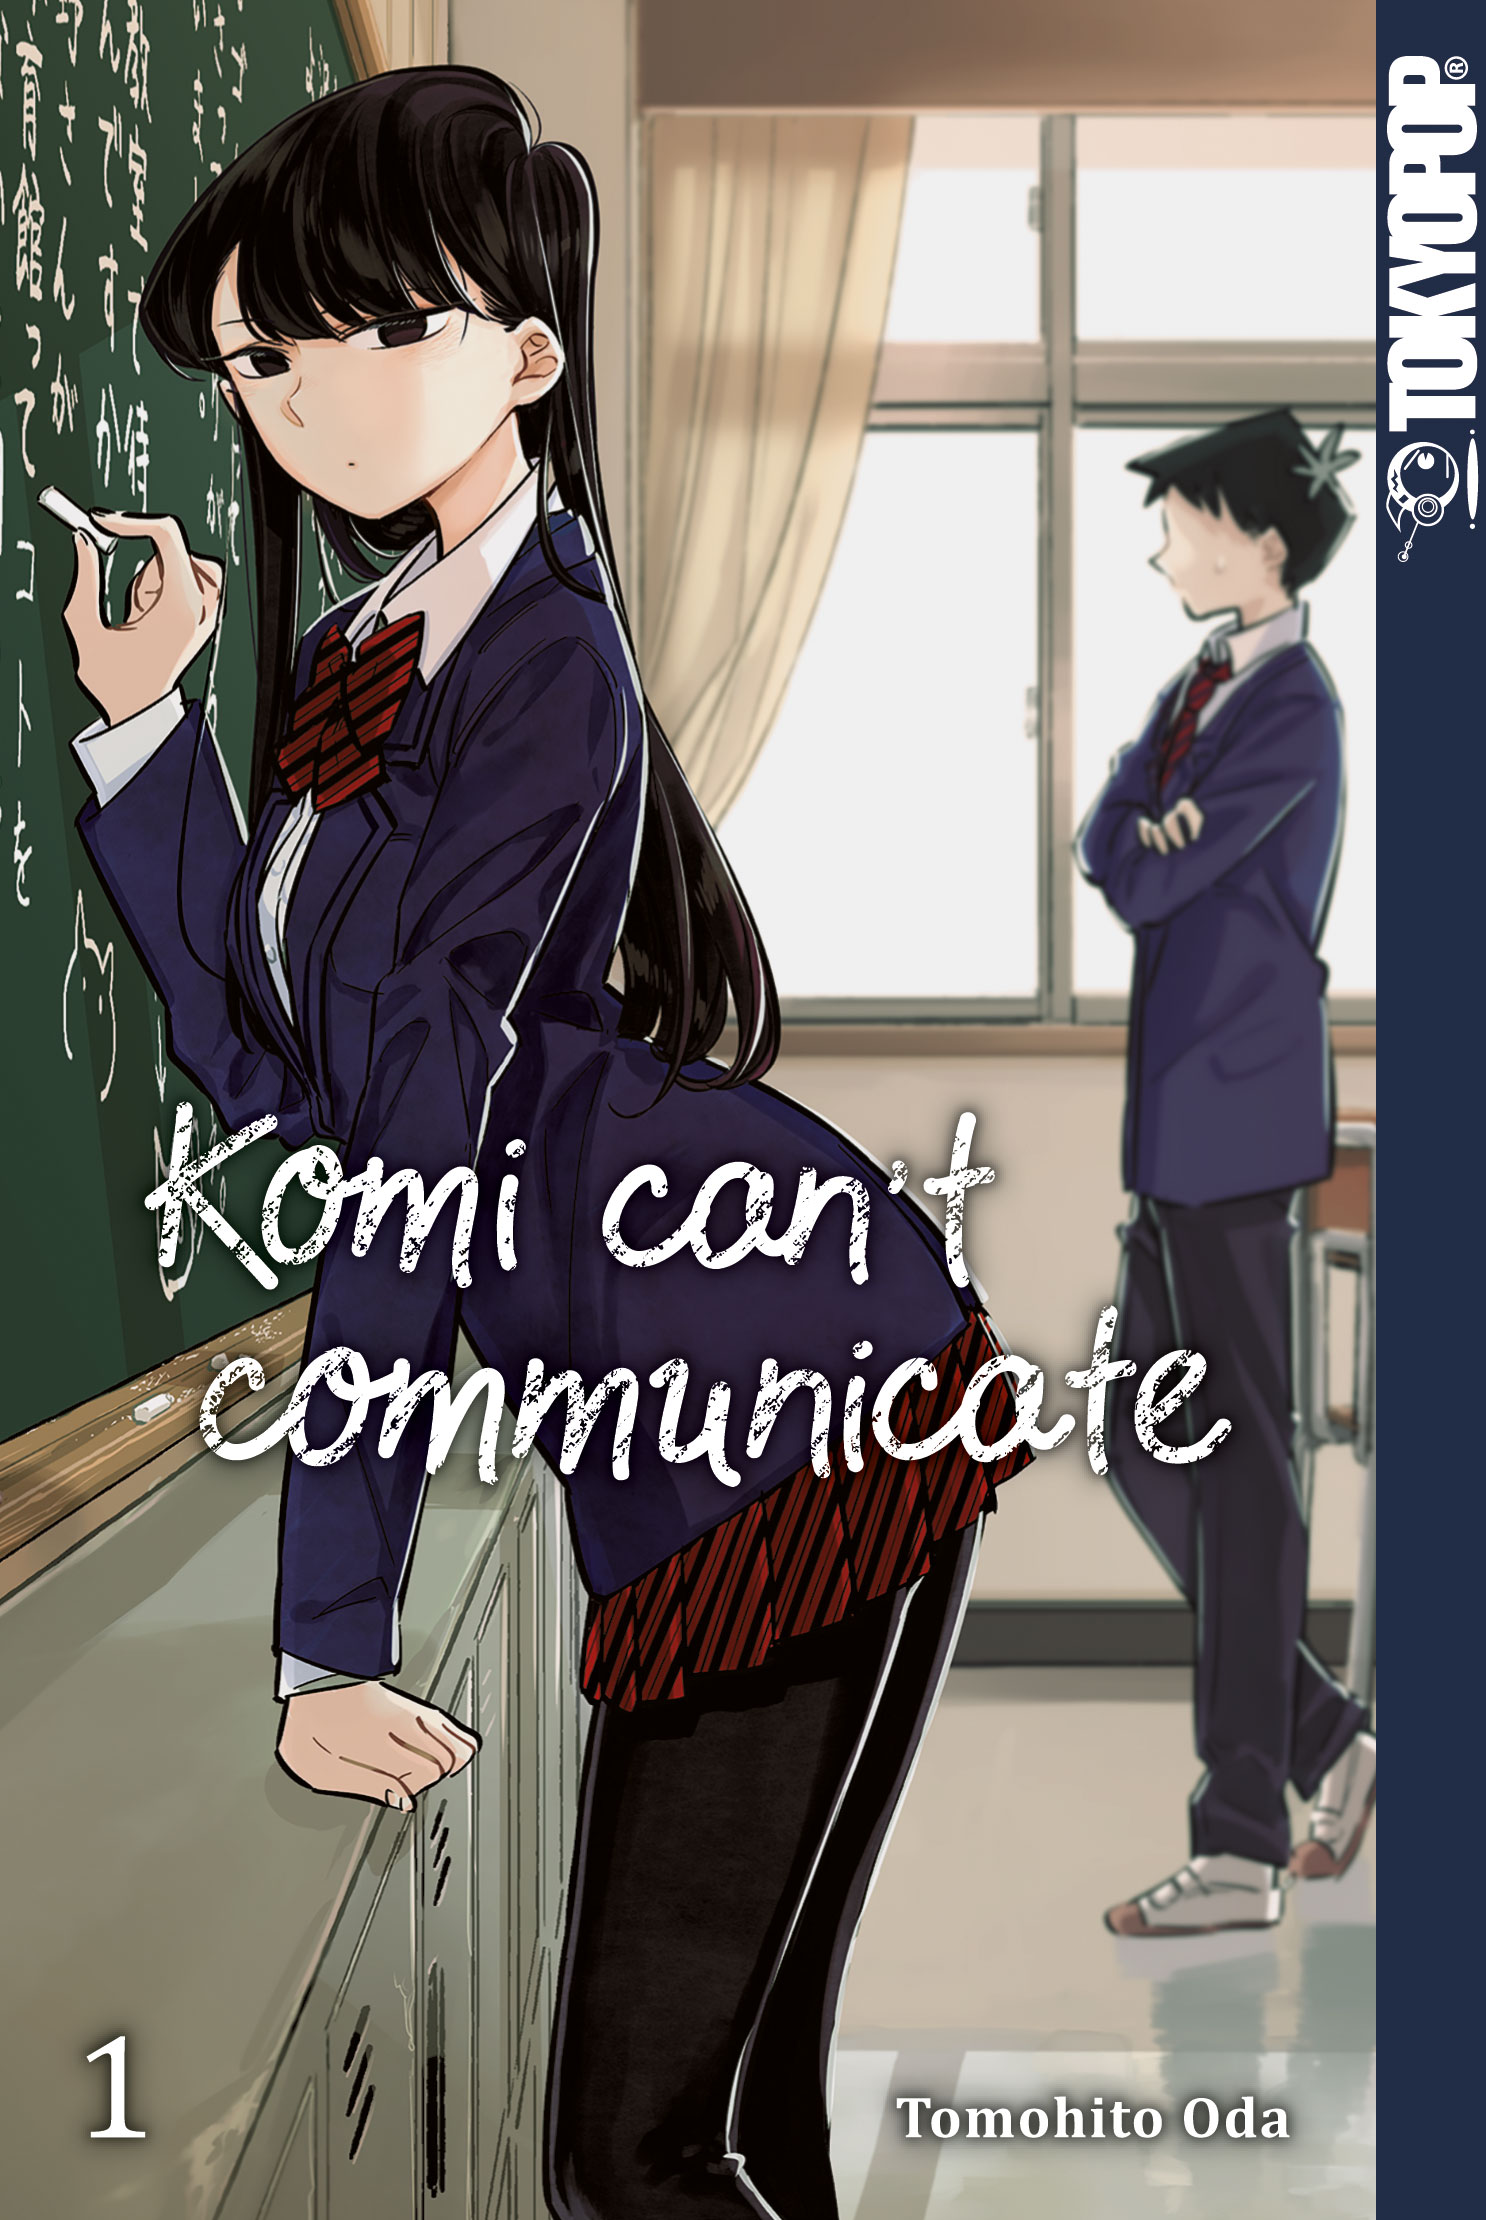 6) Komi can't communicate